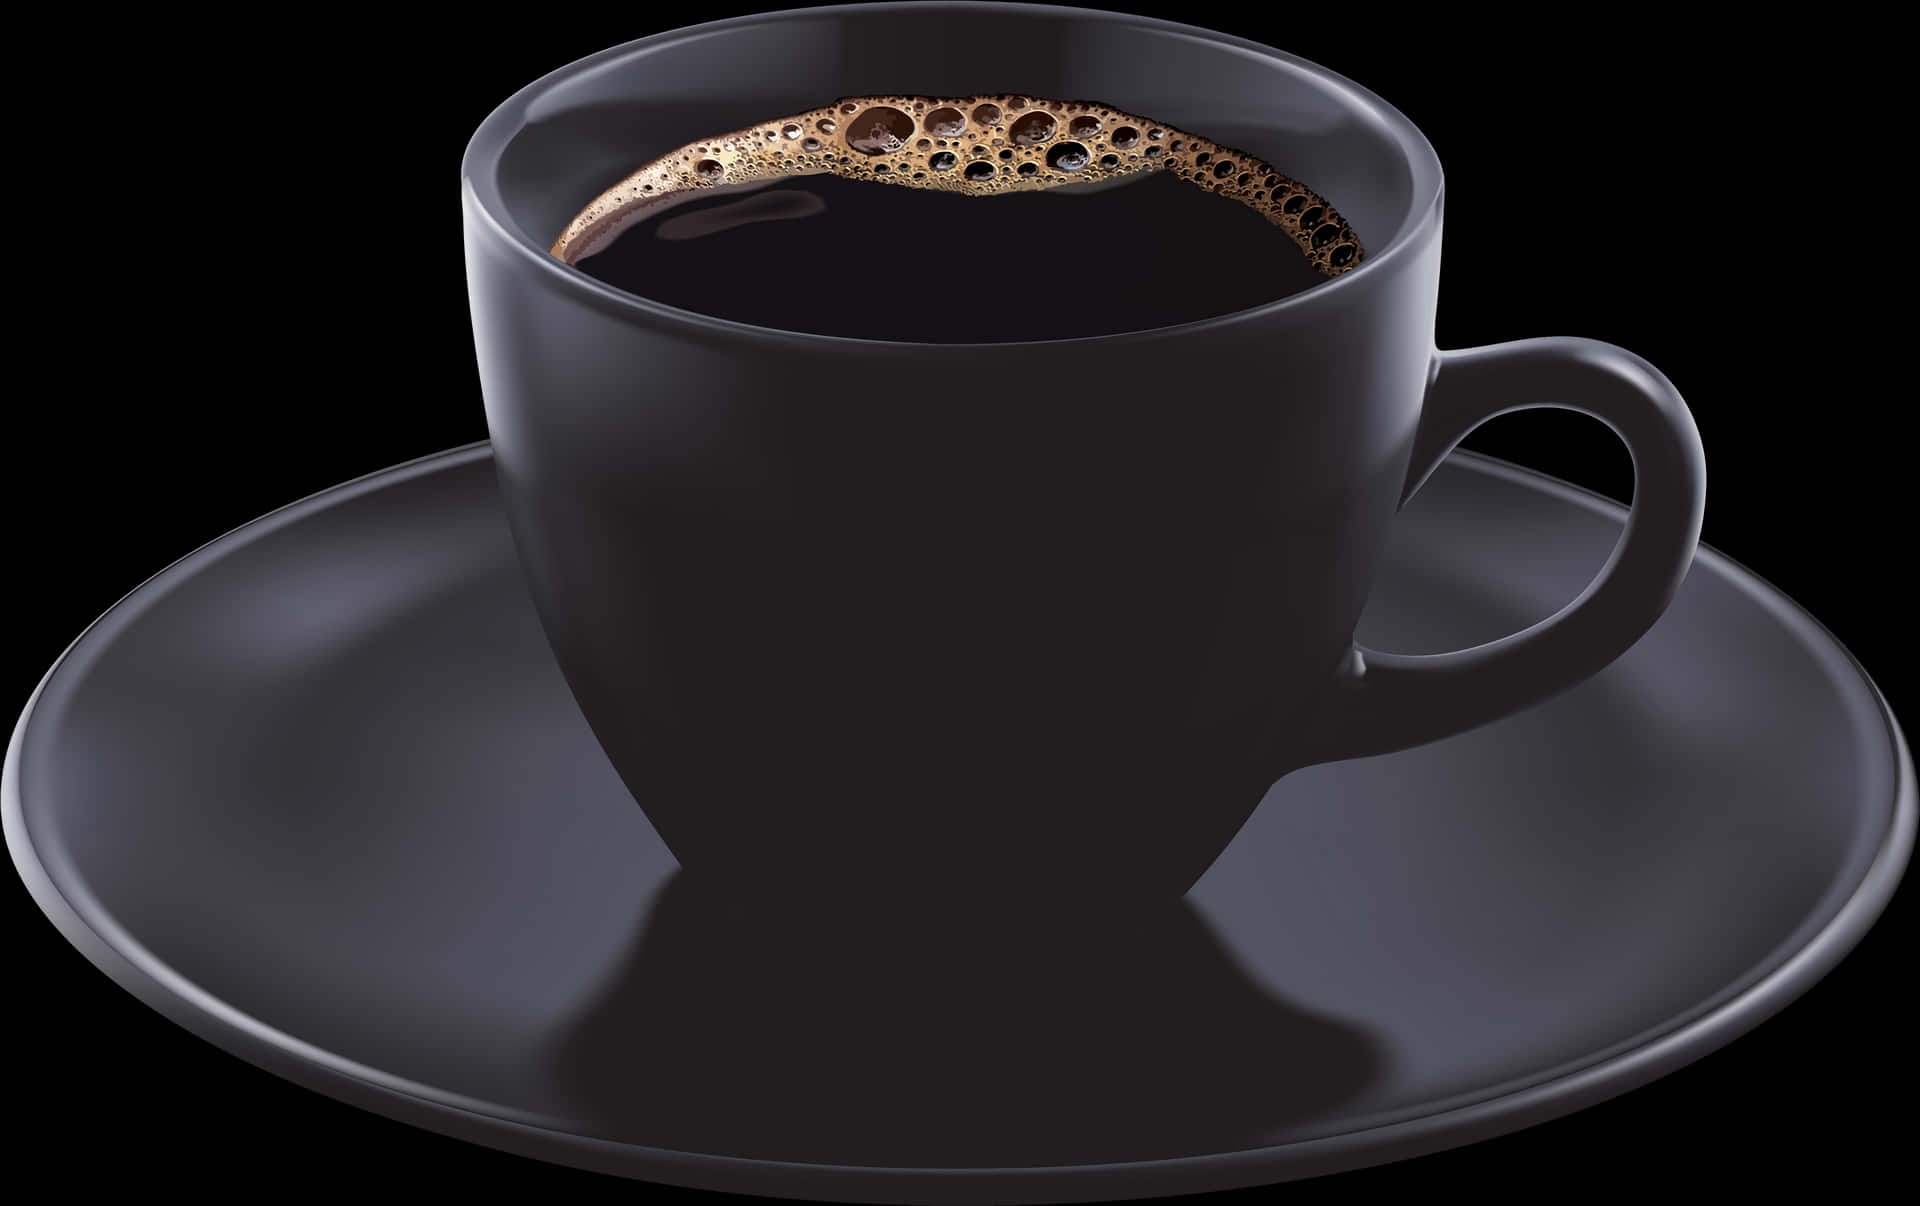 Steaming Coffee Cupon Black Background.jpg PNG image